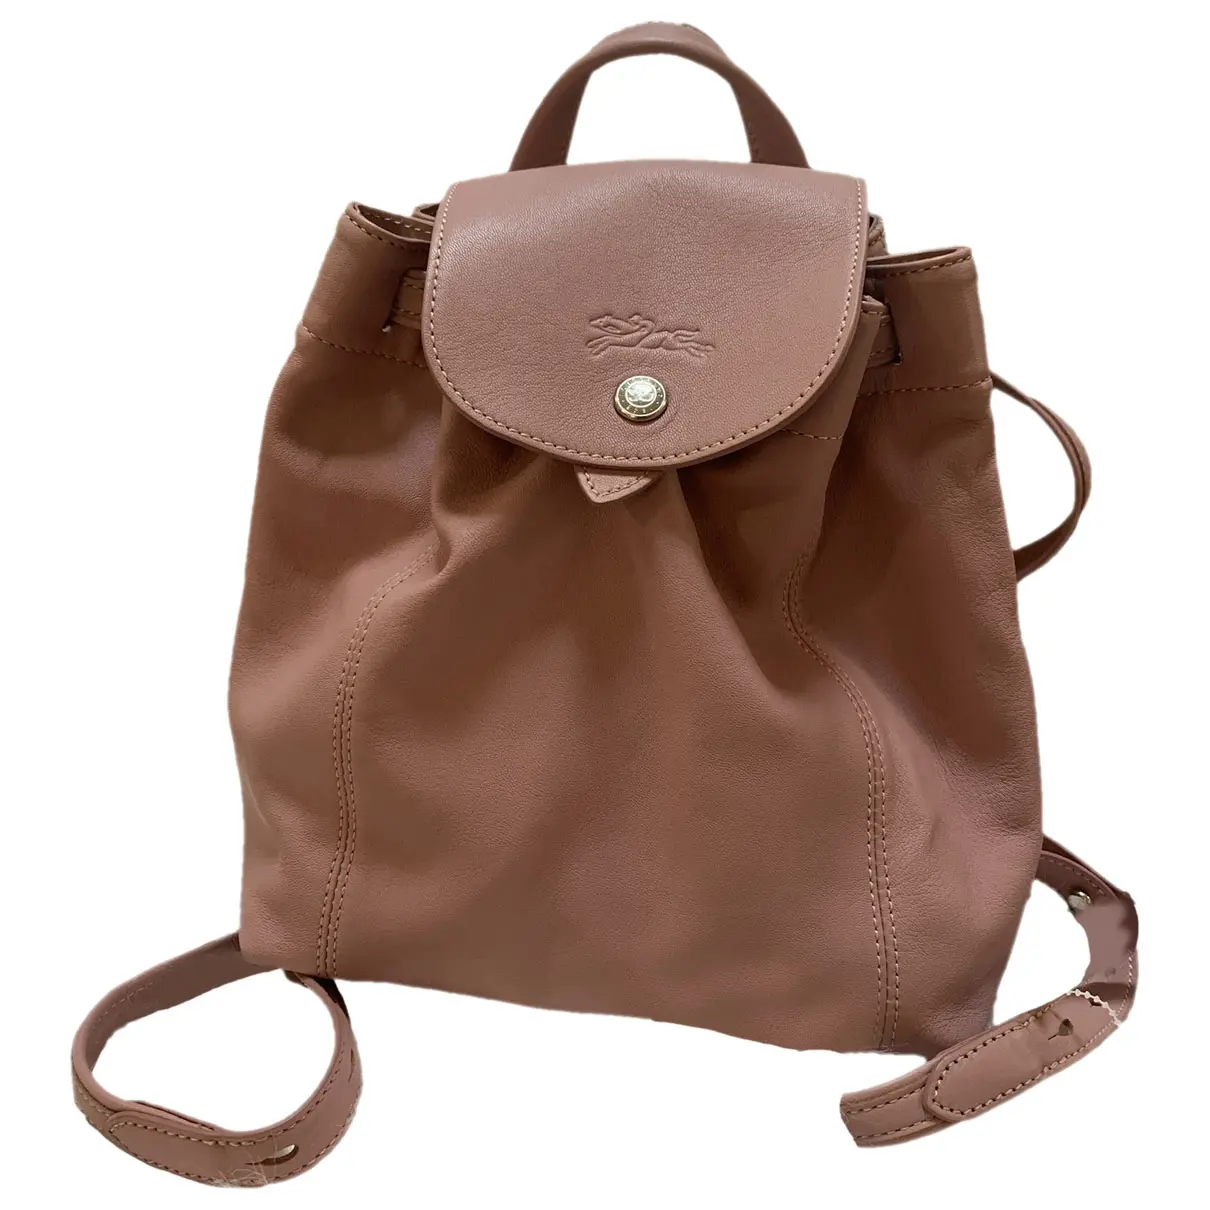 Pliage leather backpack Longchamp